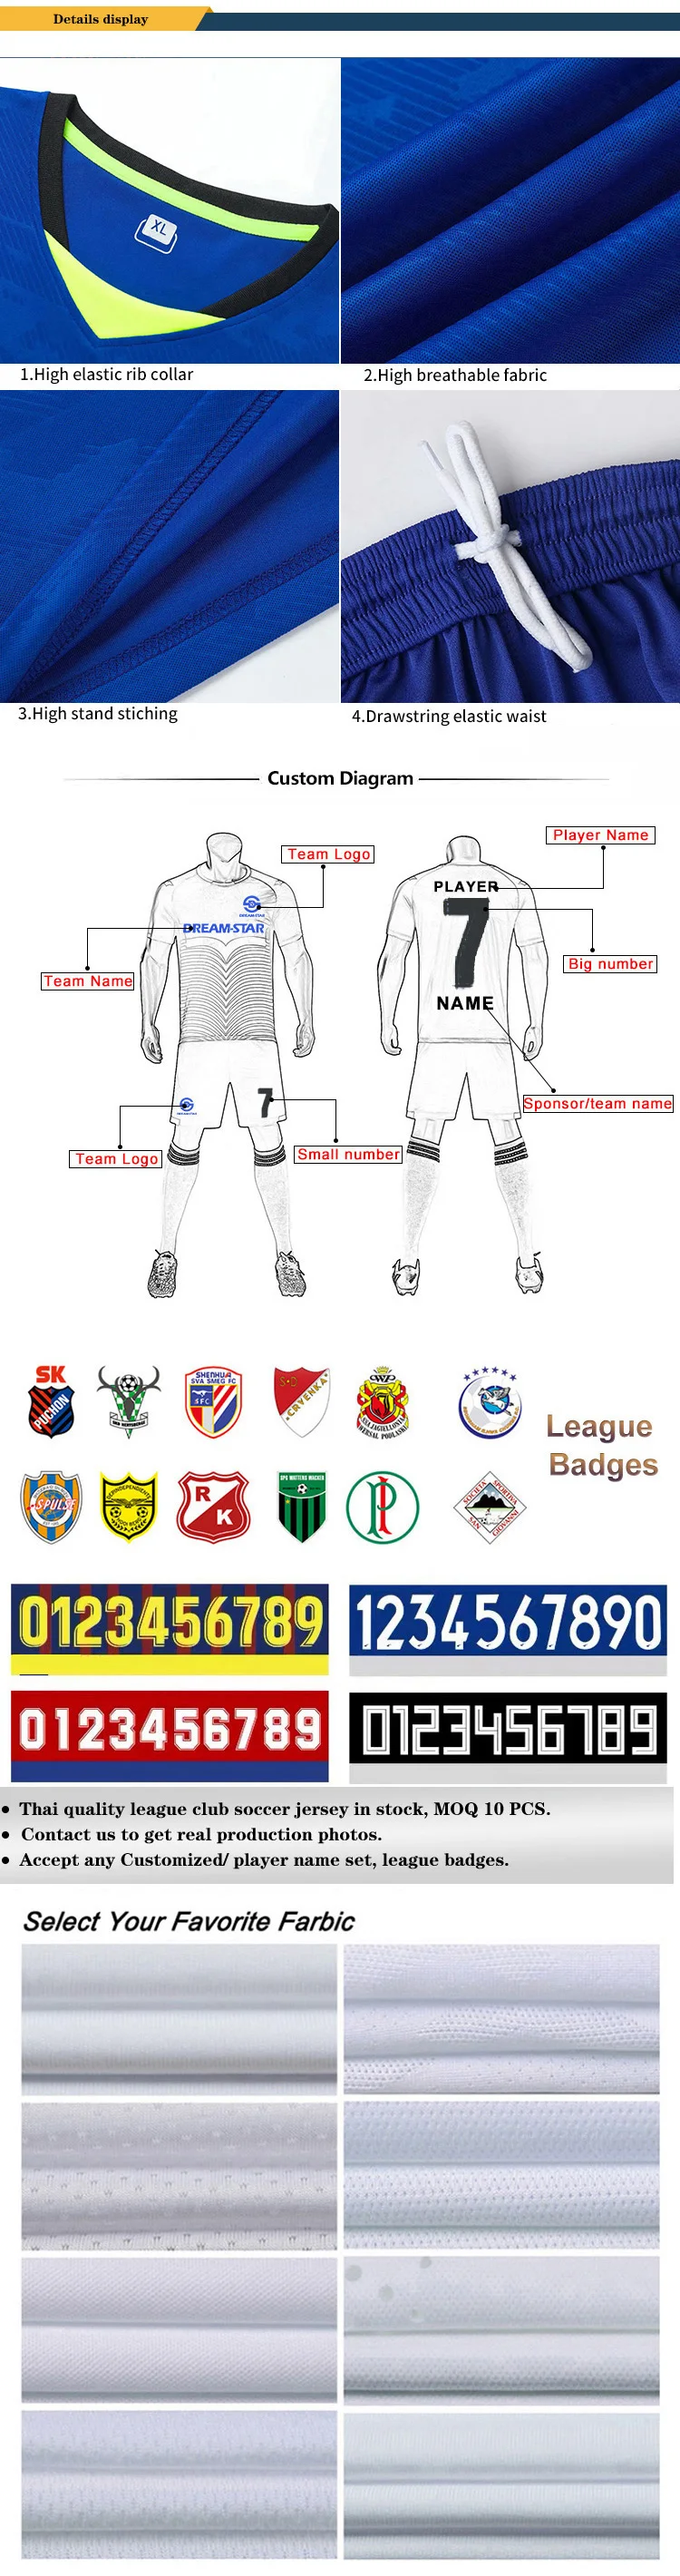 Red and Black match training jersey sport jersey football jersey uniform